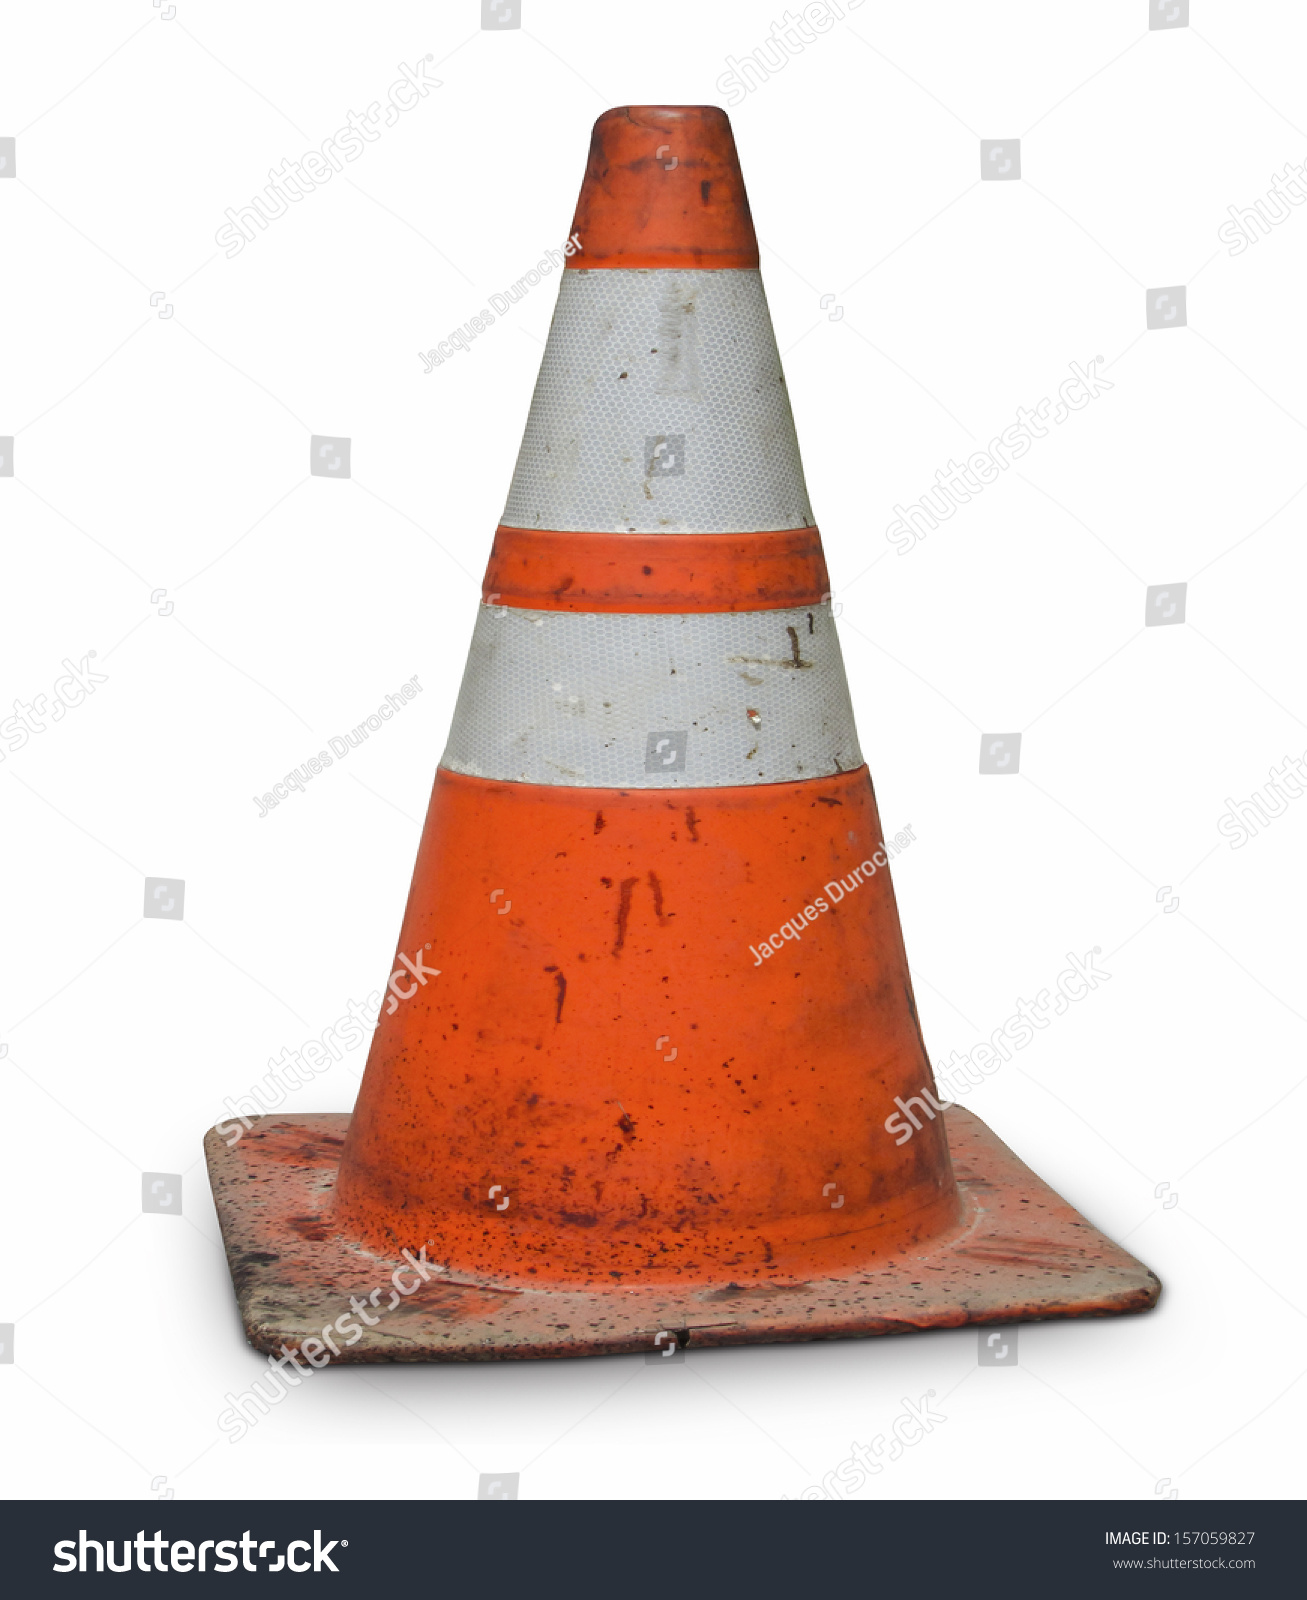 Royalty-free Real dirty traffic cone #157059827 Stock Photo | Avopix.com